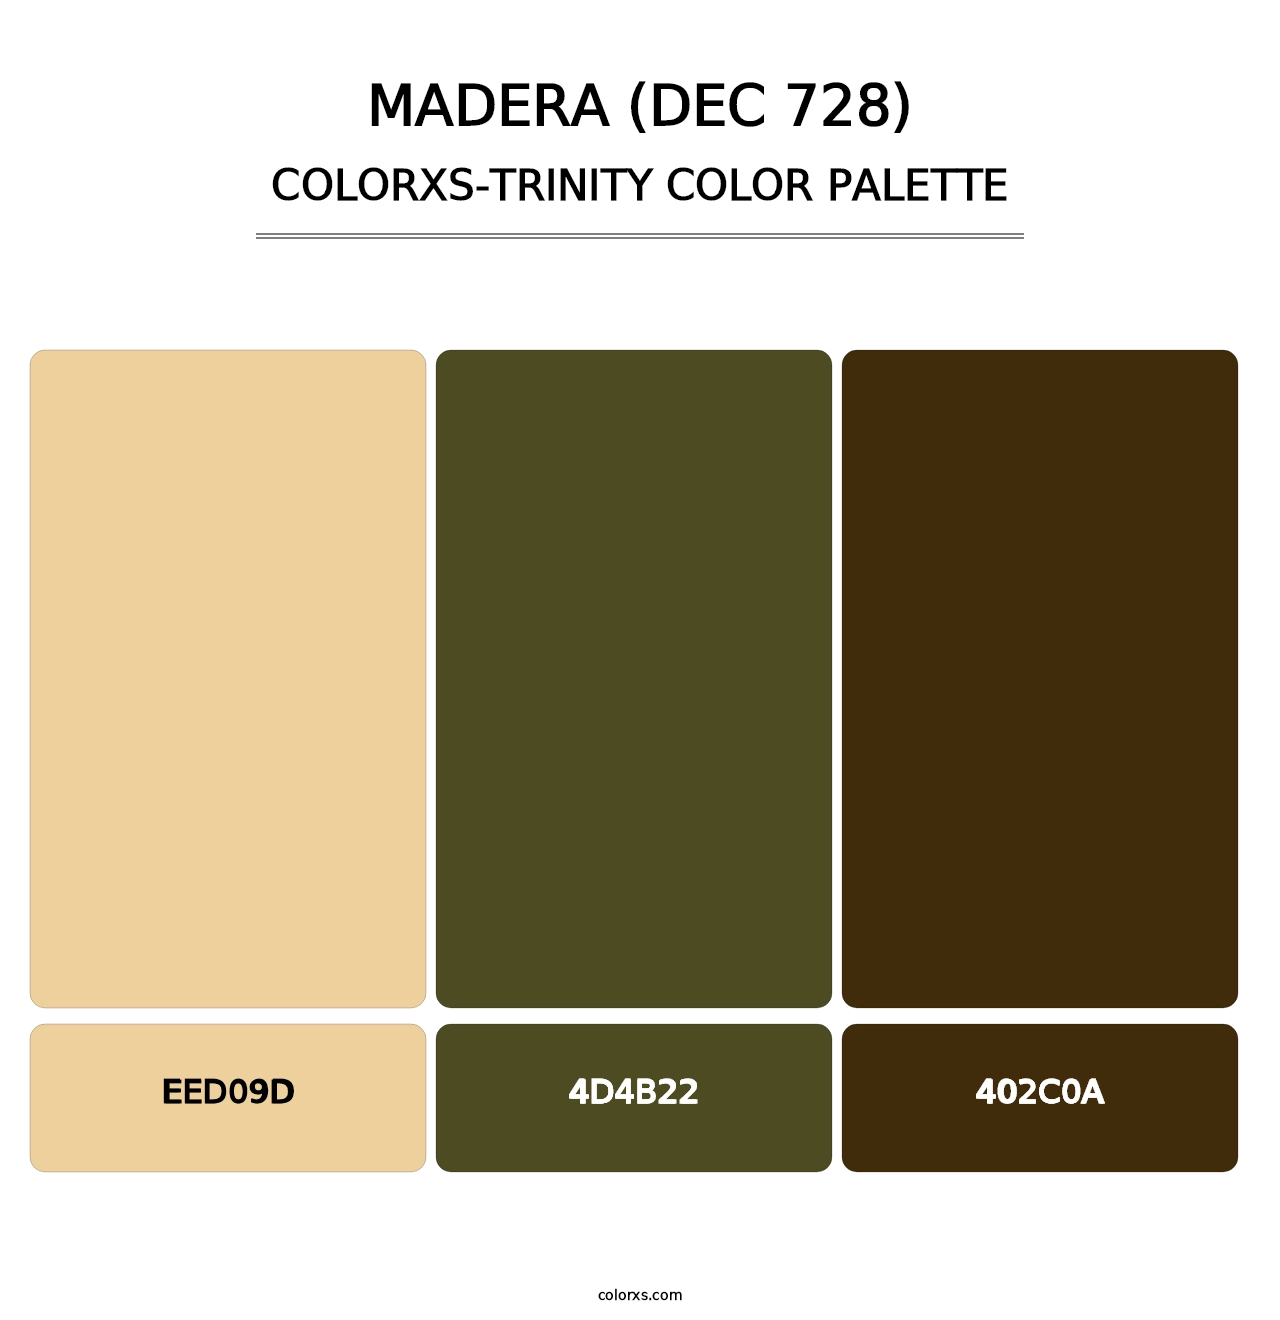 Madera (DEC 728) - Colorxs Trinity Palette